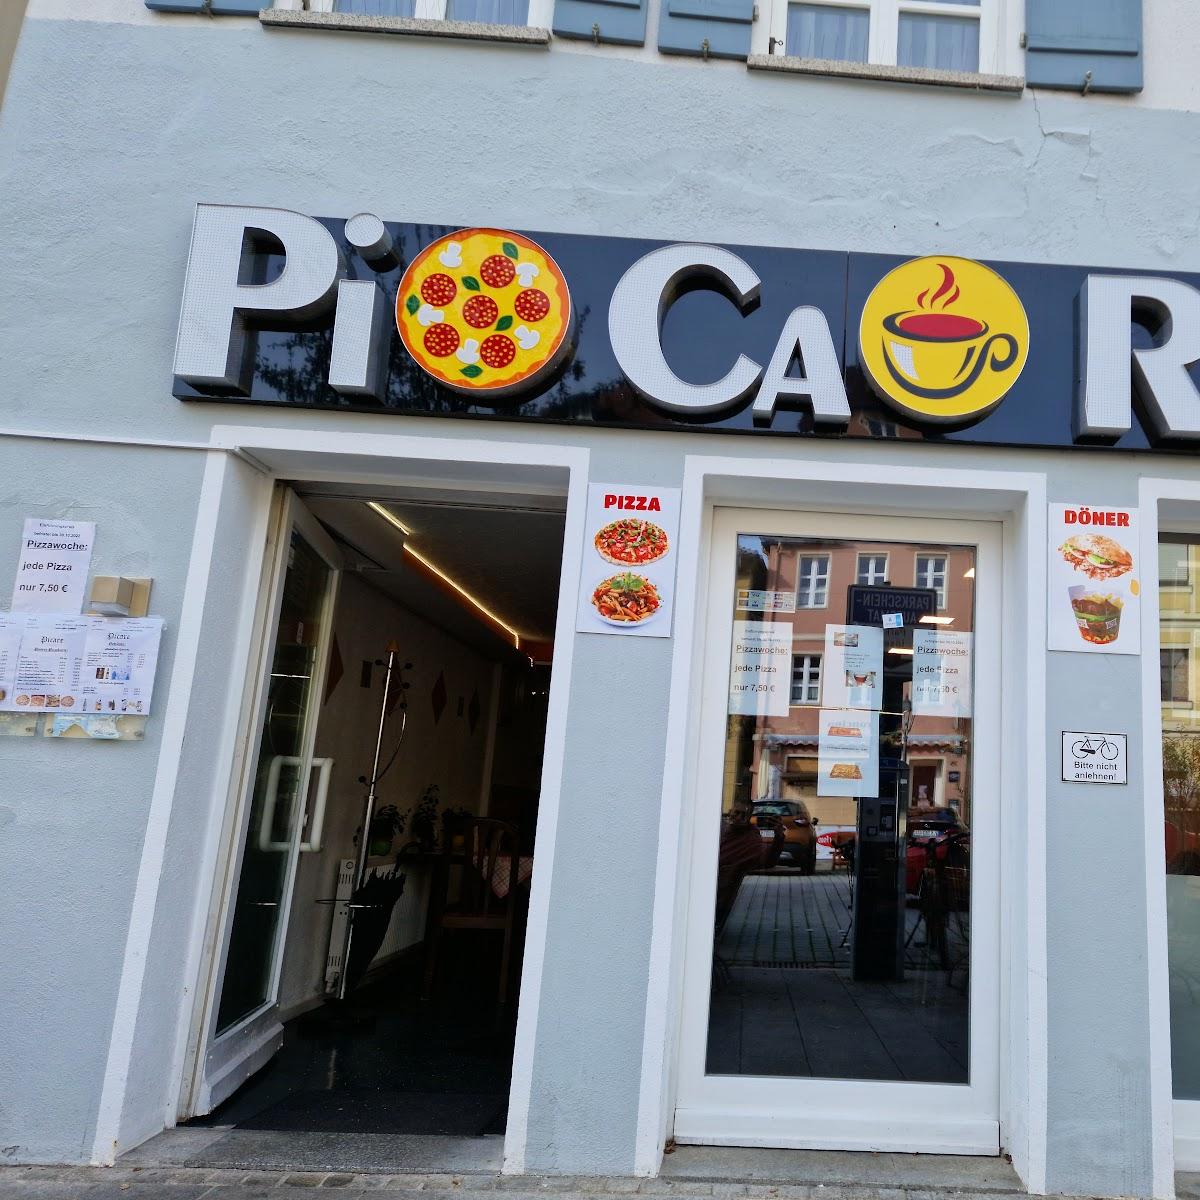 Restaurant "Picare" in Gunzenhausen